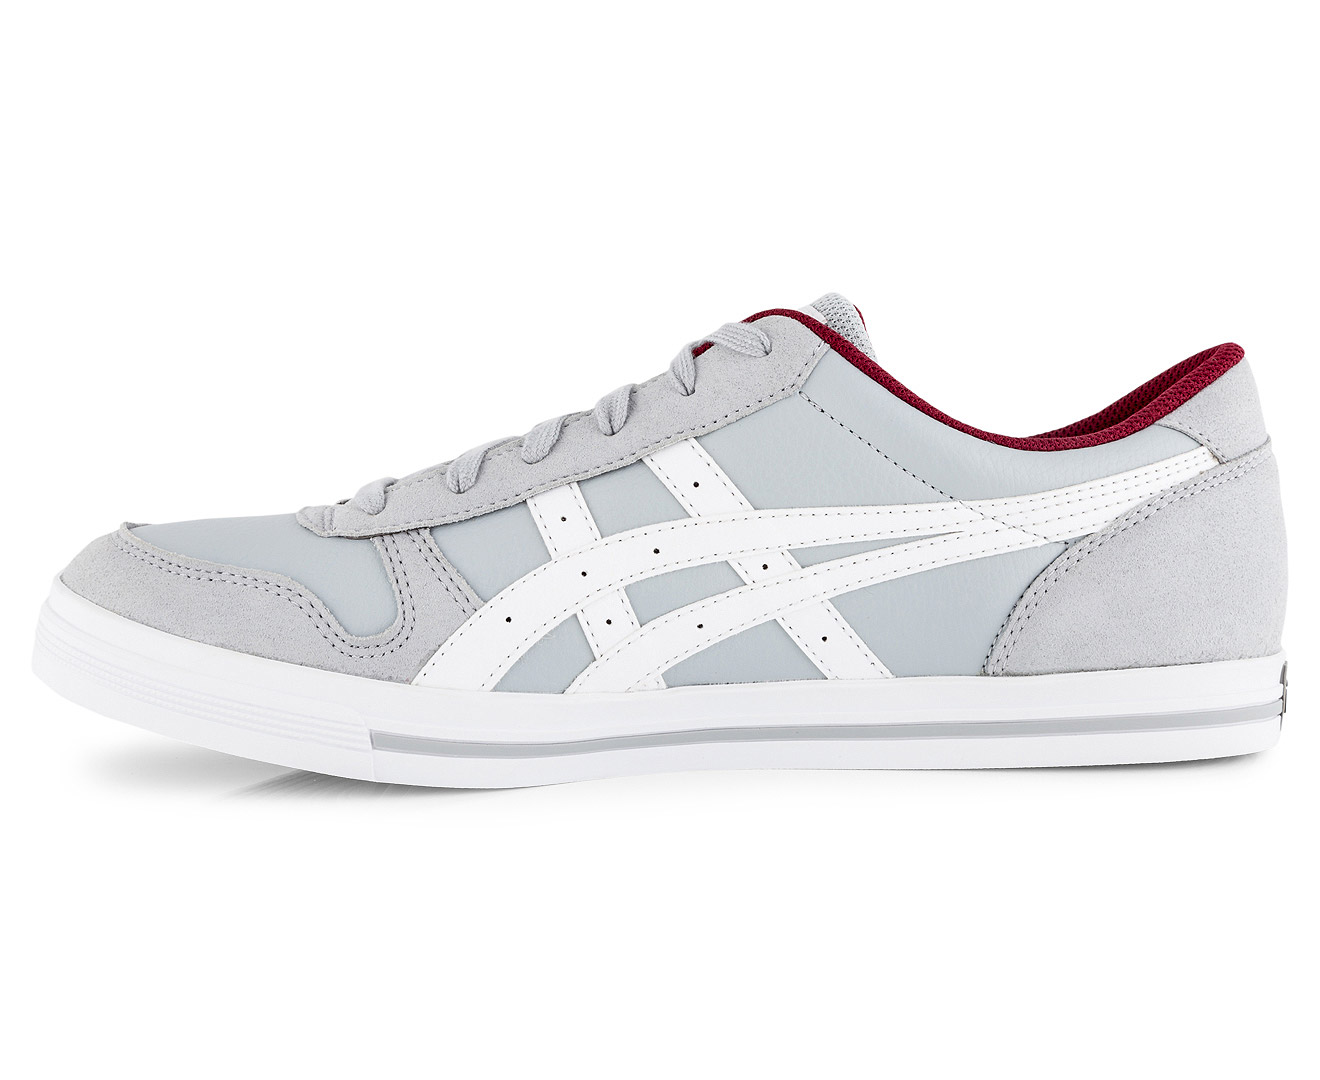 ASICS Tiger Shoe - Light Grey/White |